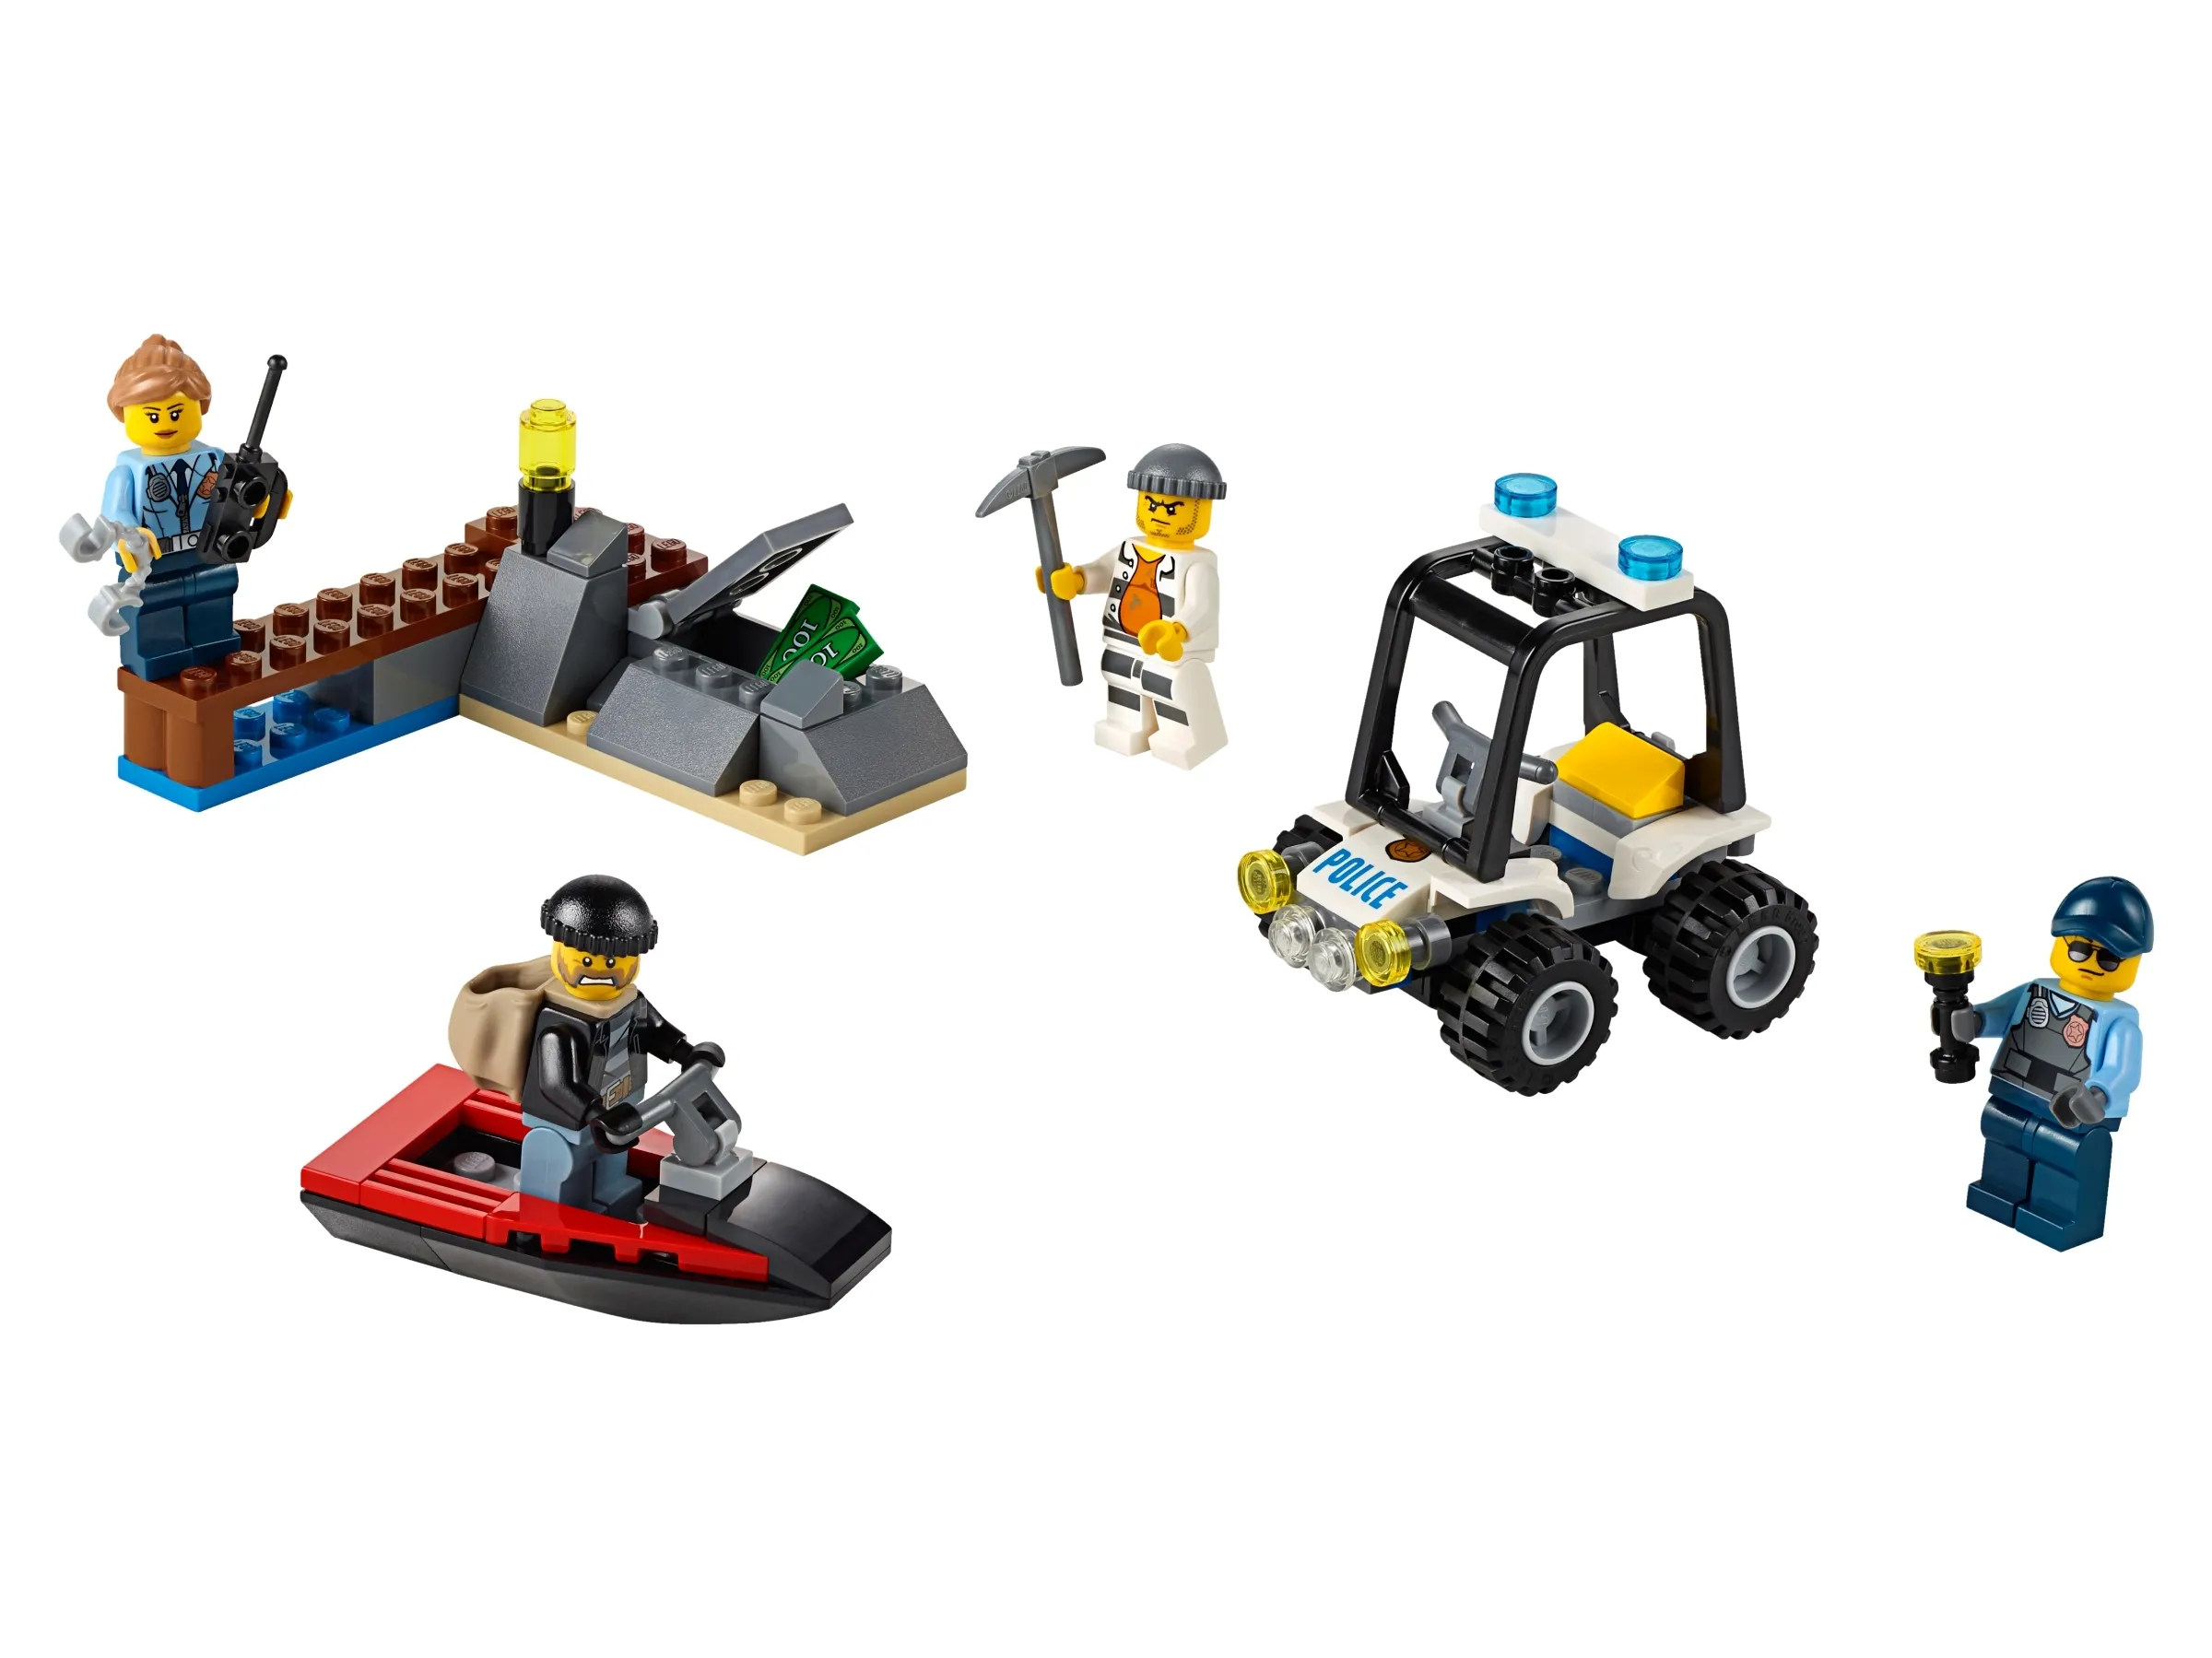 LEGO Prison Island Starter Set • 60127 • SetDB